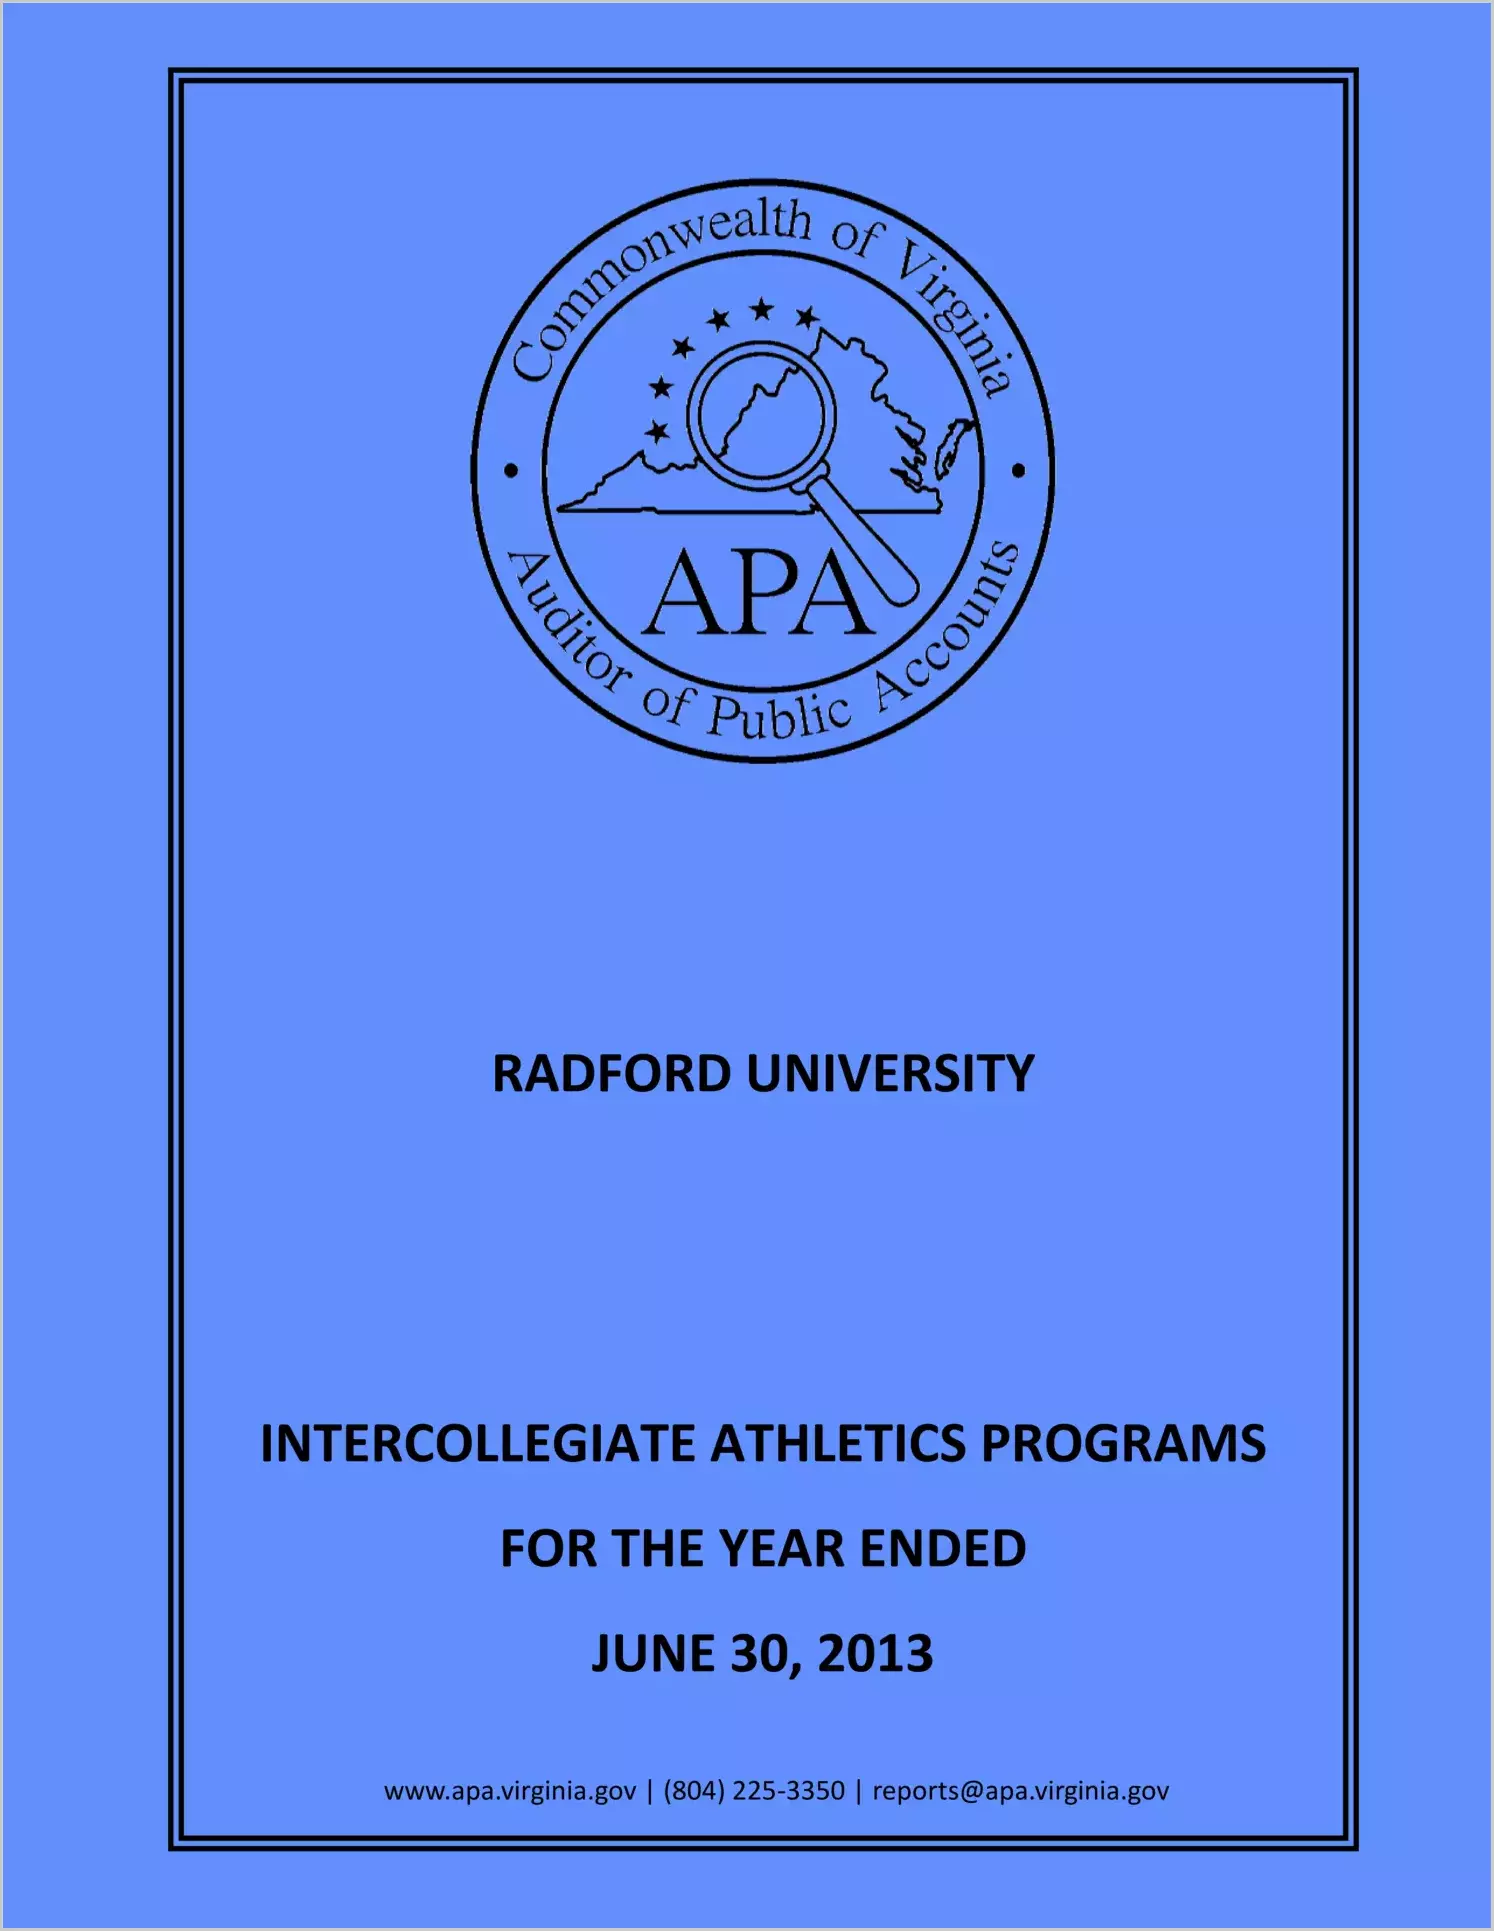 Radford University Intercollegiate Athletics Programs for the year ended June 30, 2013